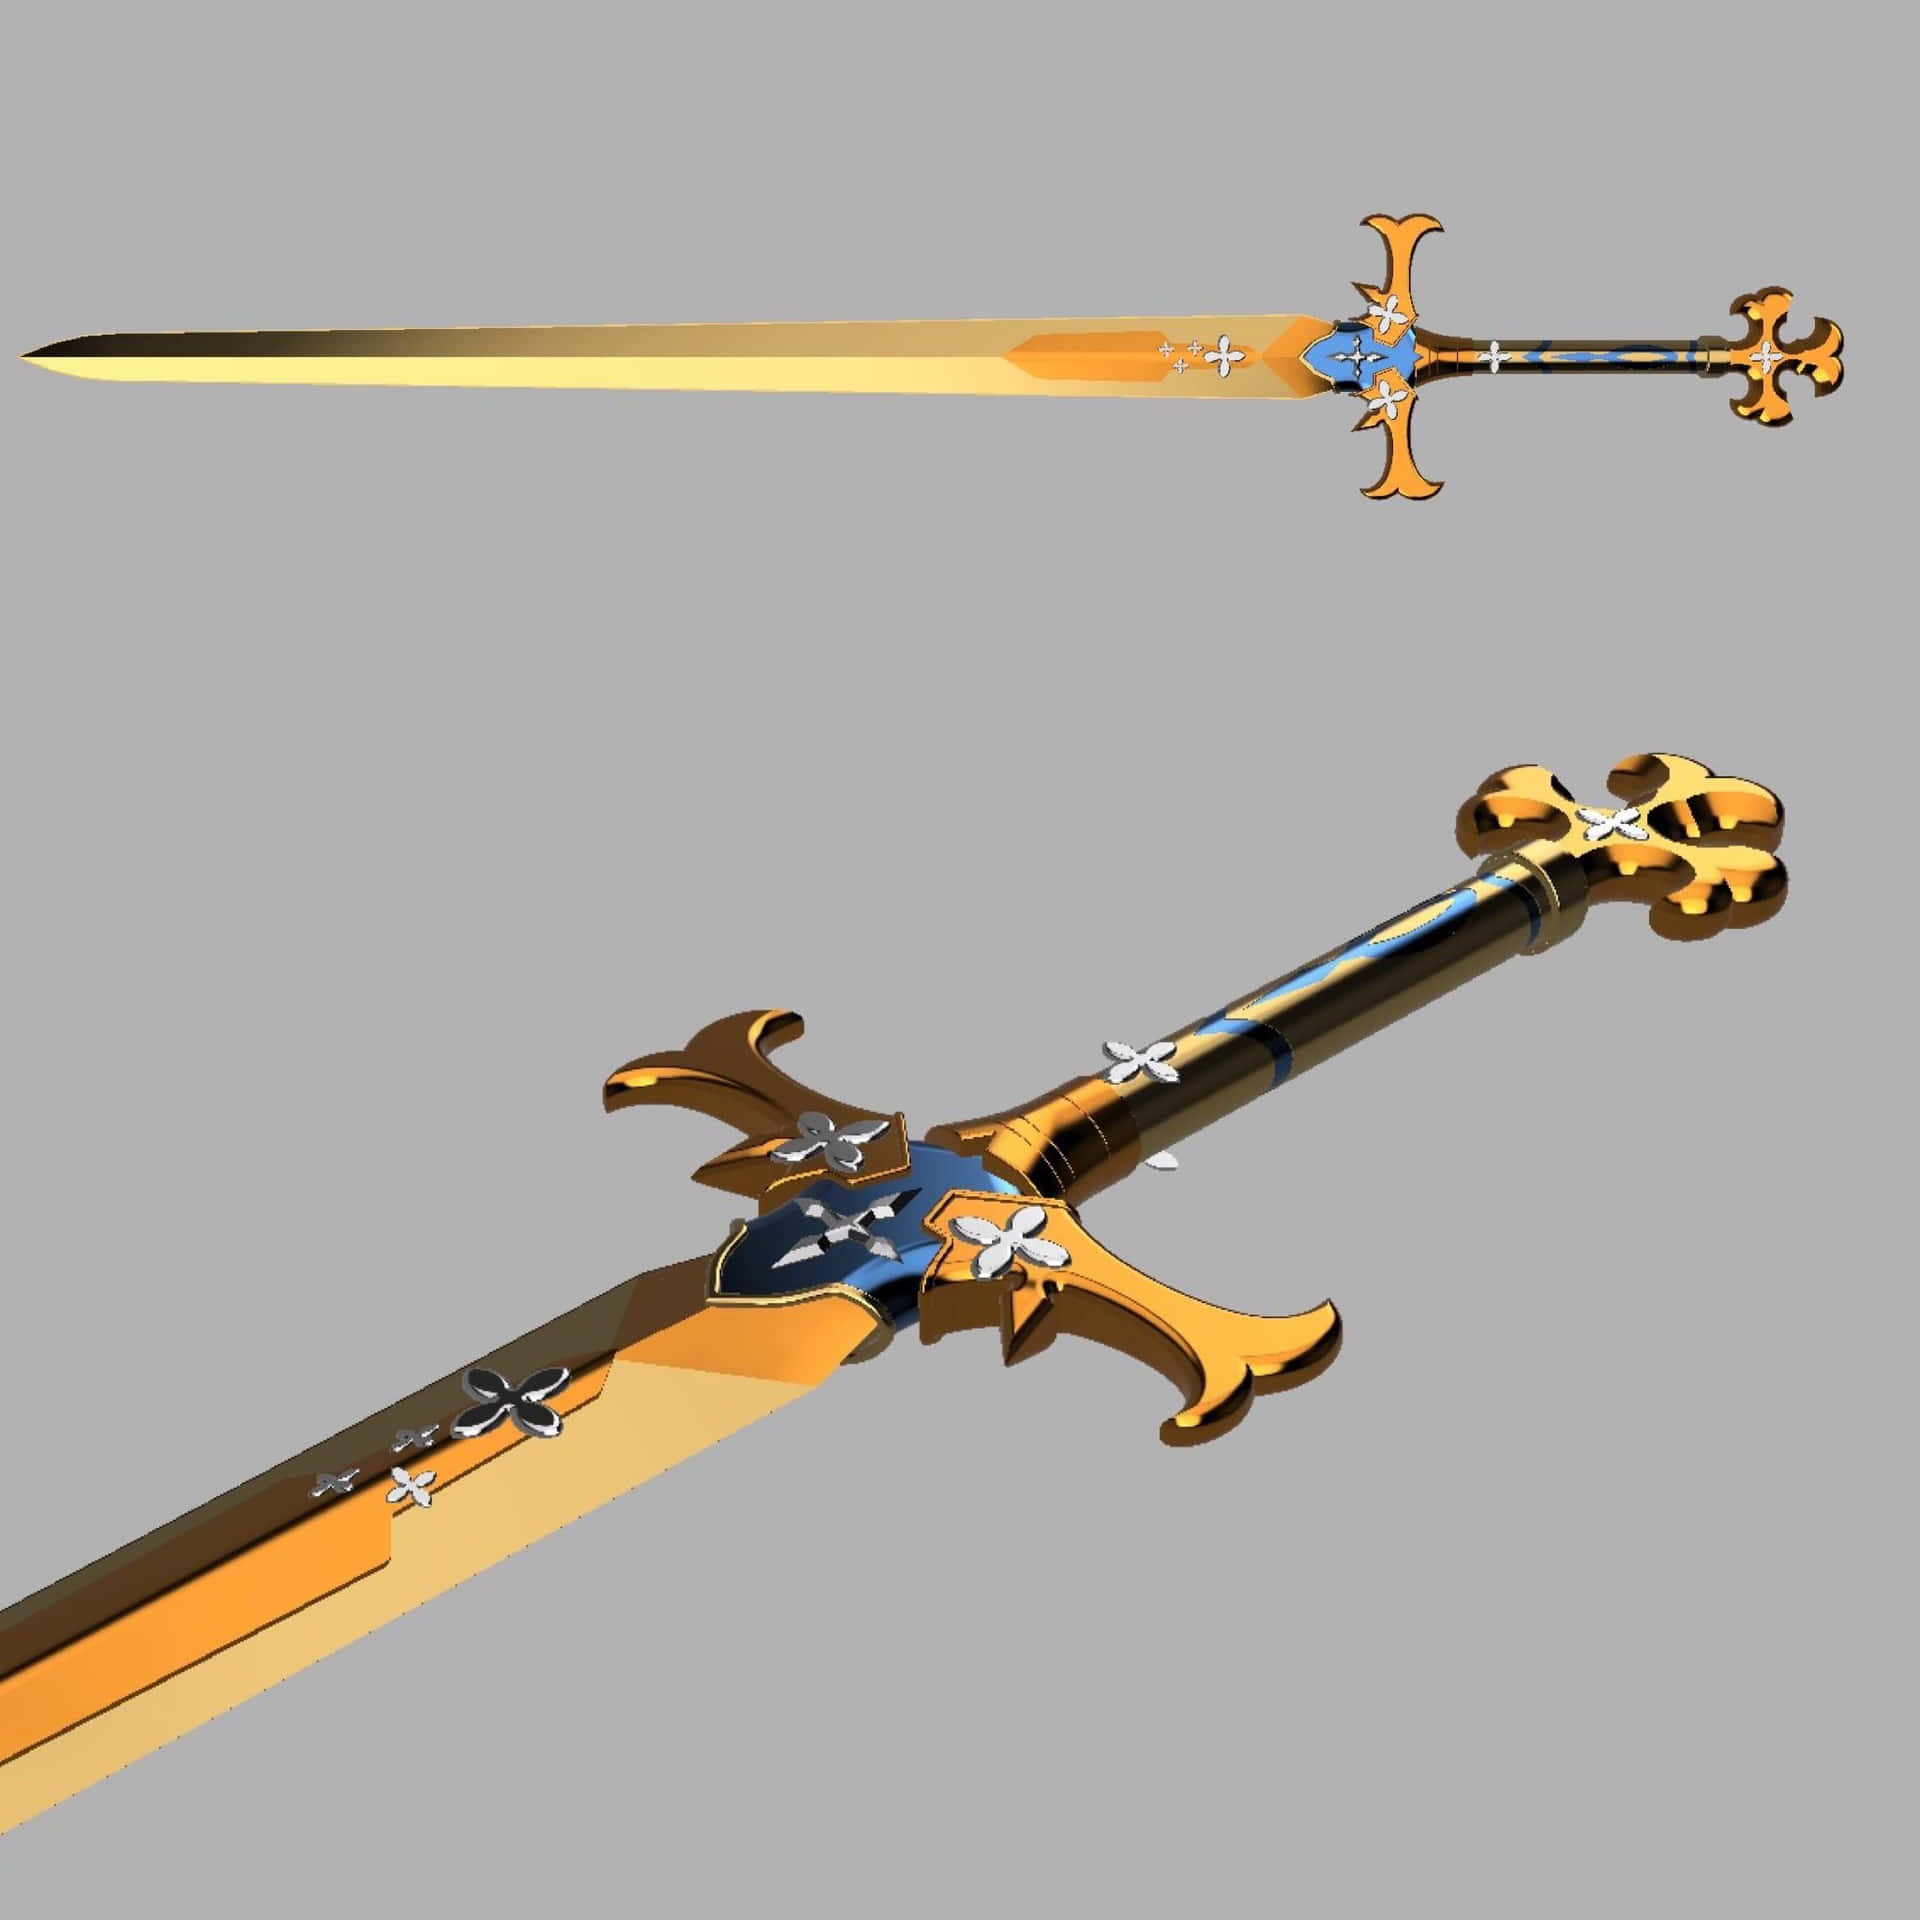 Excalibur - The Legendary Sword of King Arthur Wallpaper